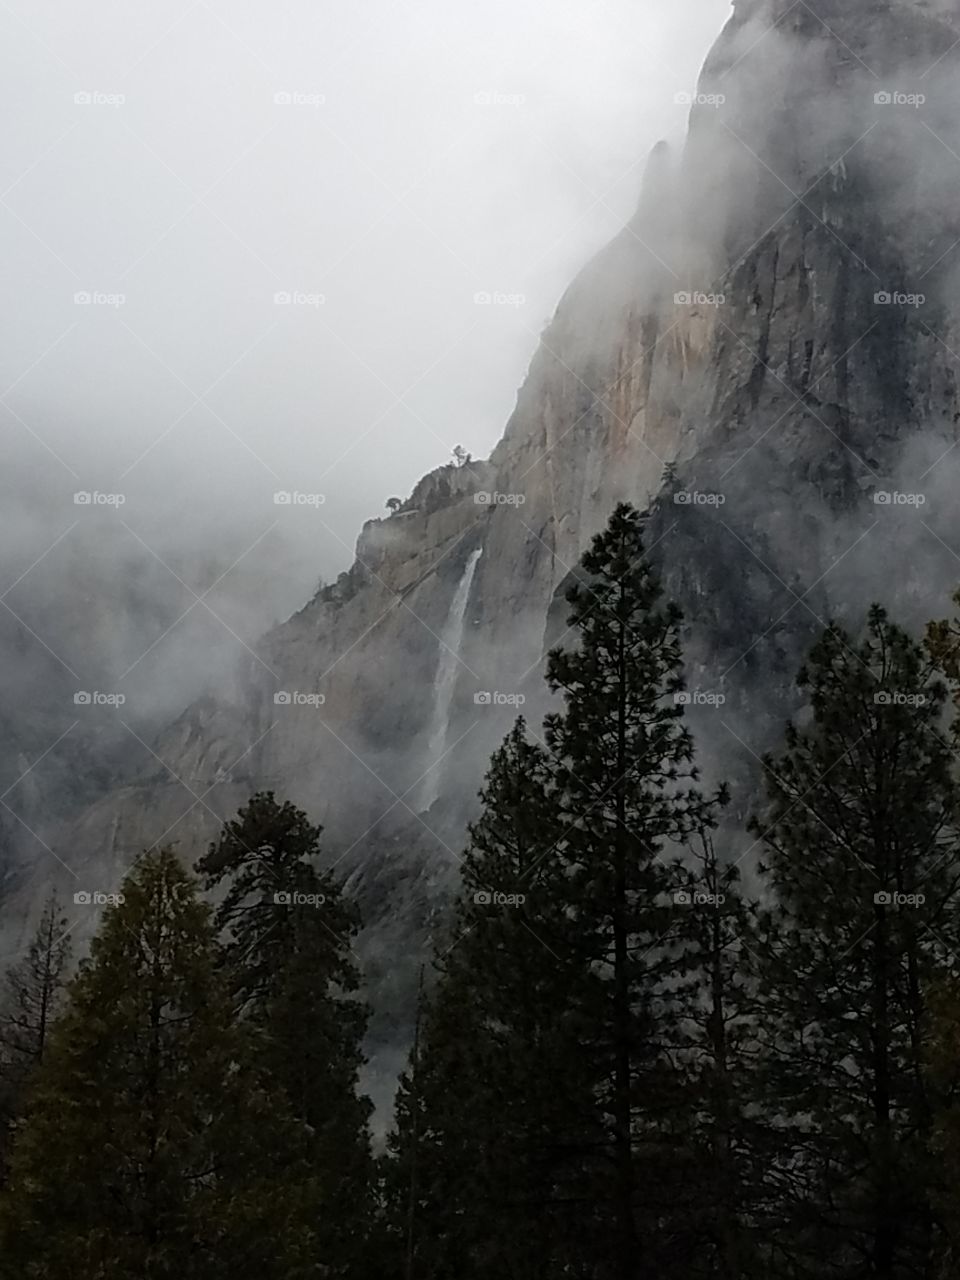 Yosemite Falls in winter mist 2.